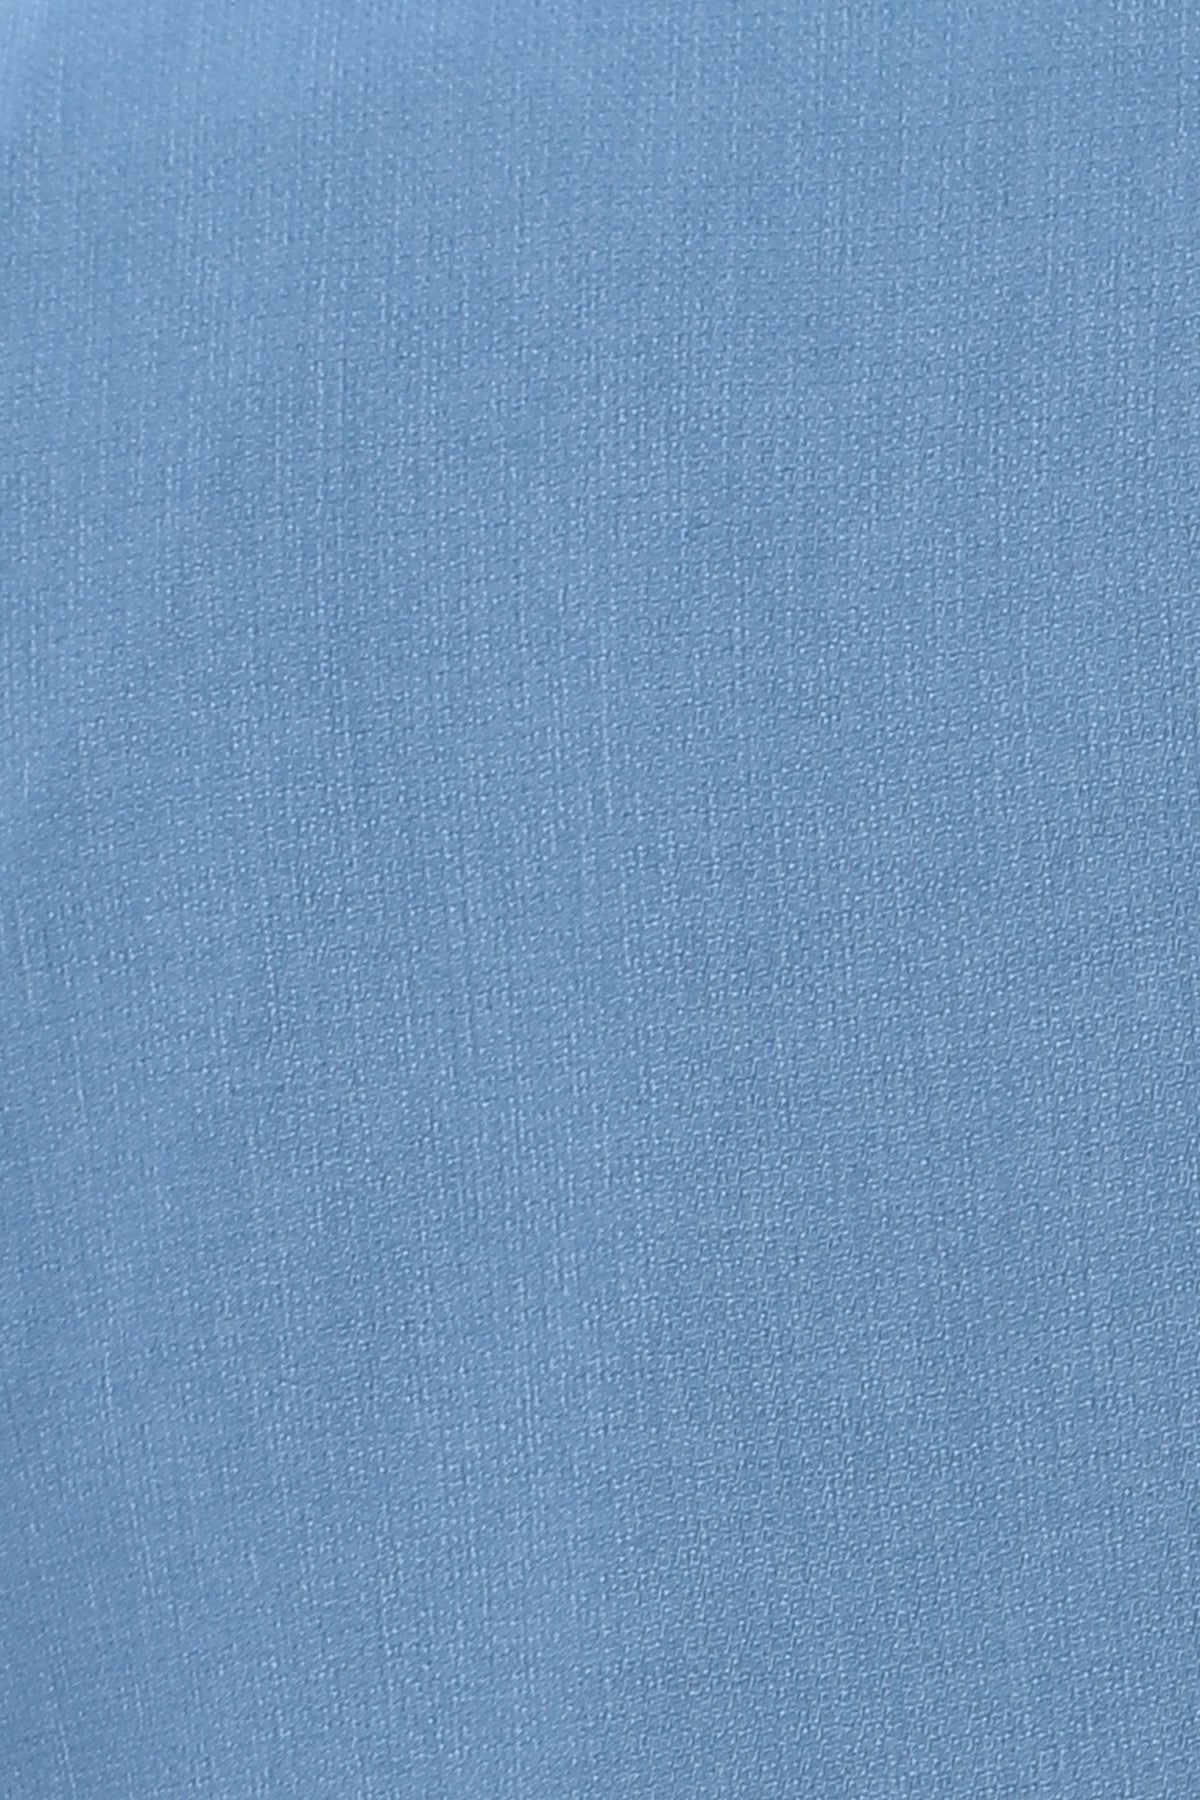 Sky Blue Patterned Fabric Luxury Suit 3 Pieces